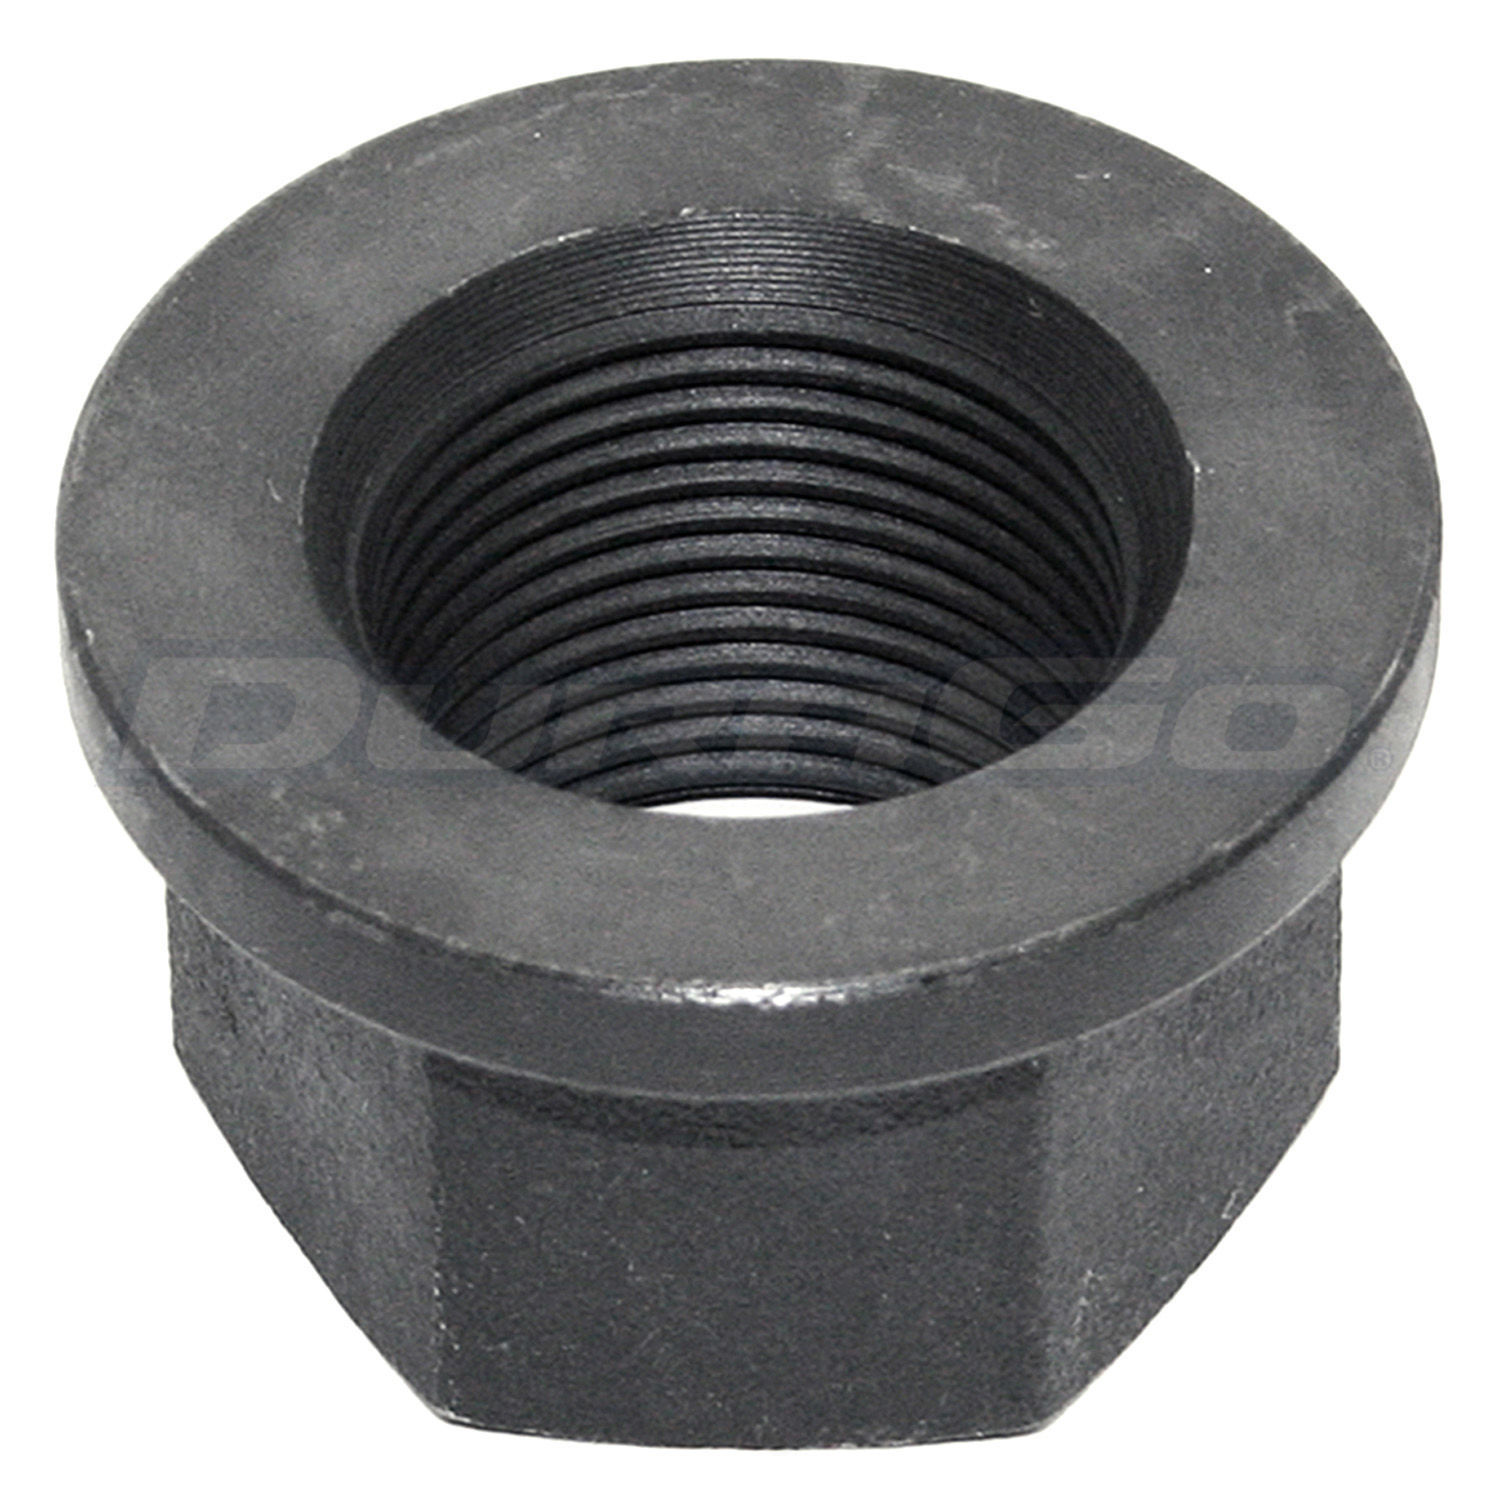 DURAGO - Axle Nut (Front) - D48 295-99012